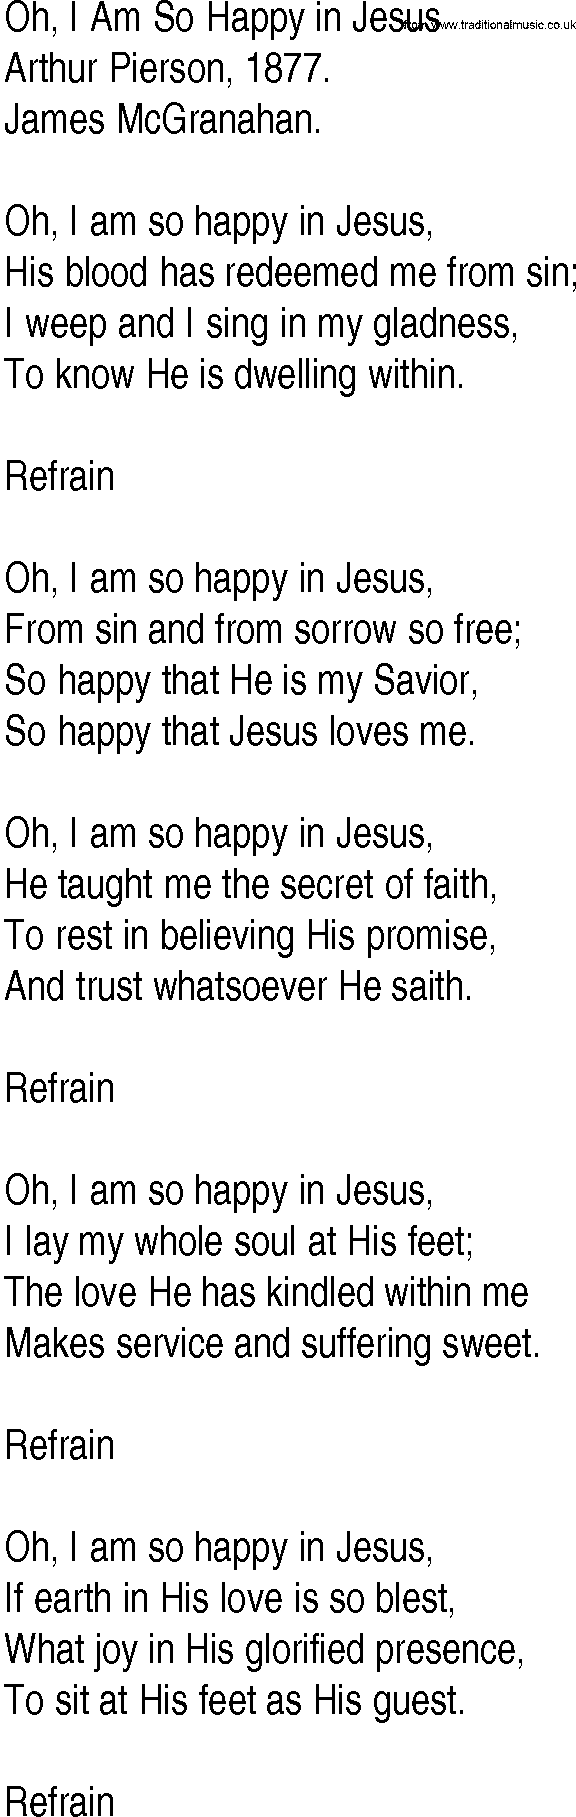 Hymn and Gospel Song: Oh, I Am So Happy in Jesus by Arthur Pierson lyrics